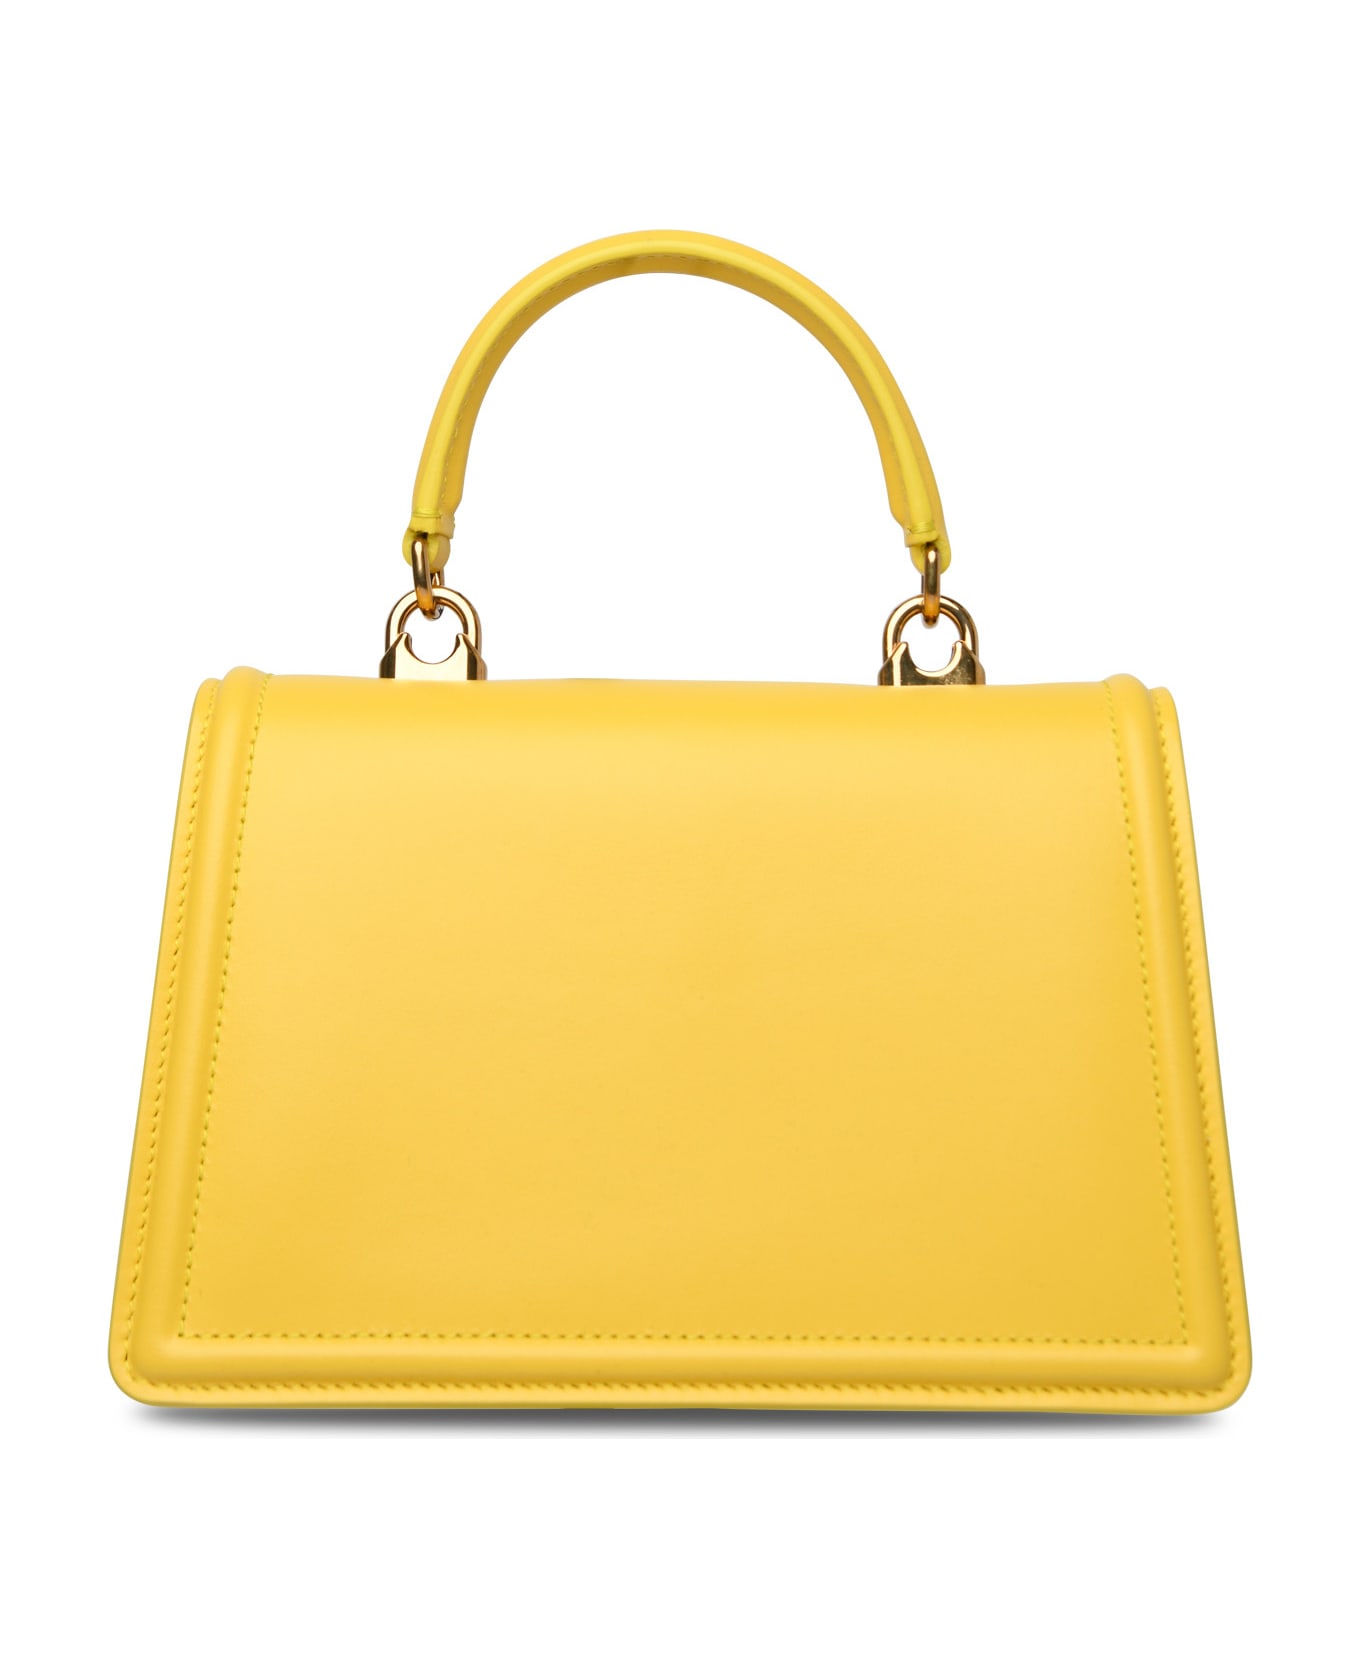 Dolce & Gabbana Devotion Bag Shoulder Bag - Yellow トートバッグ